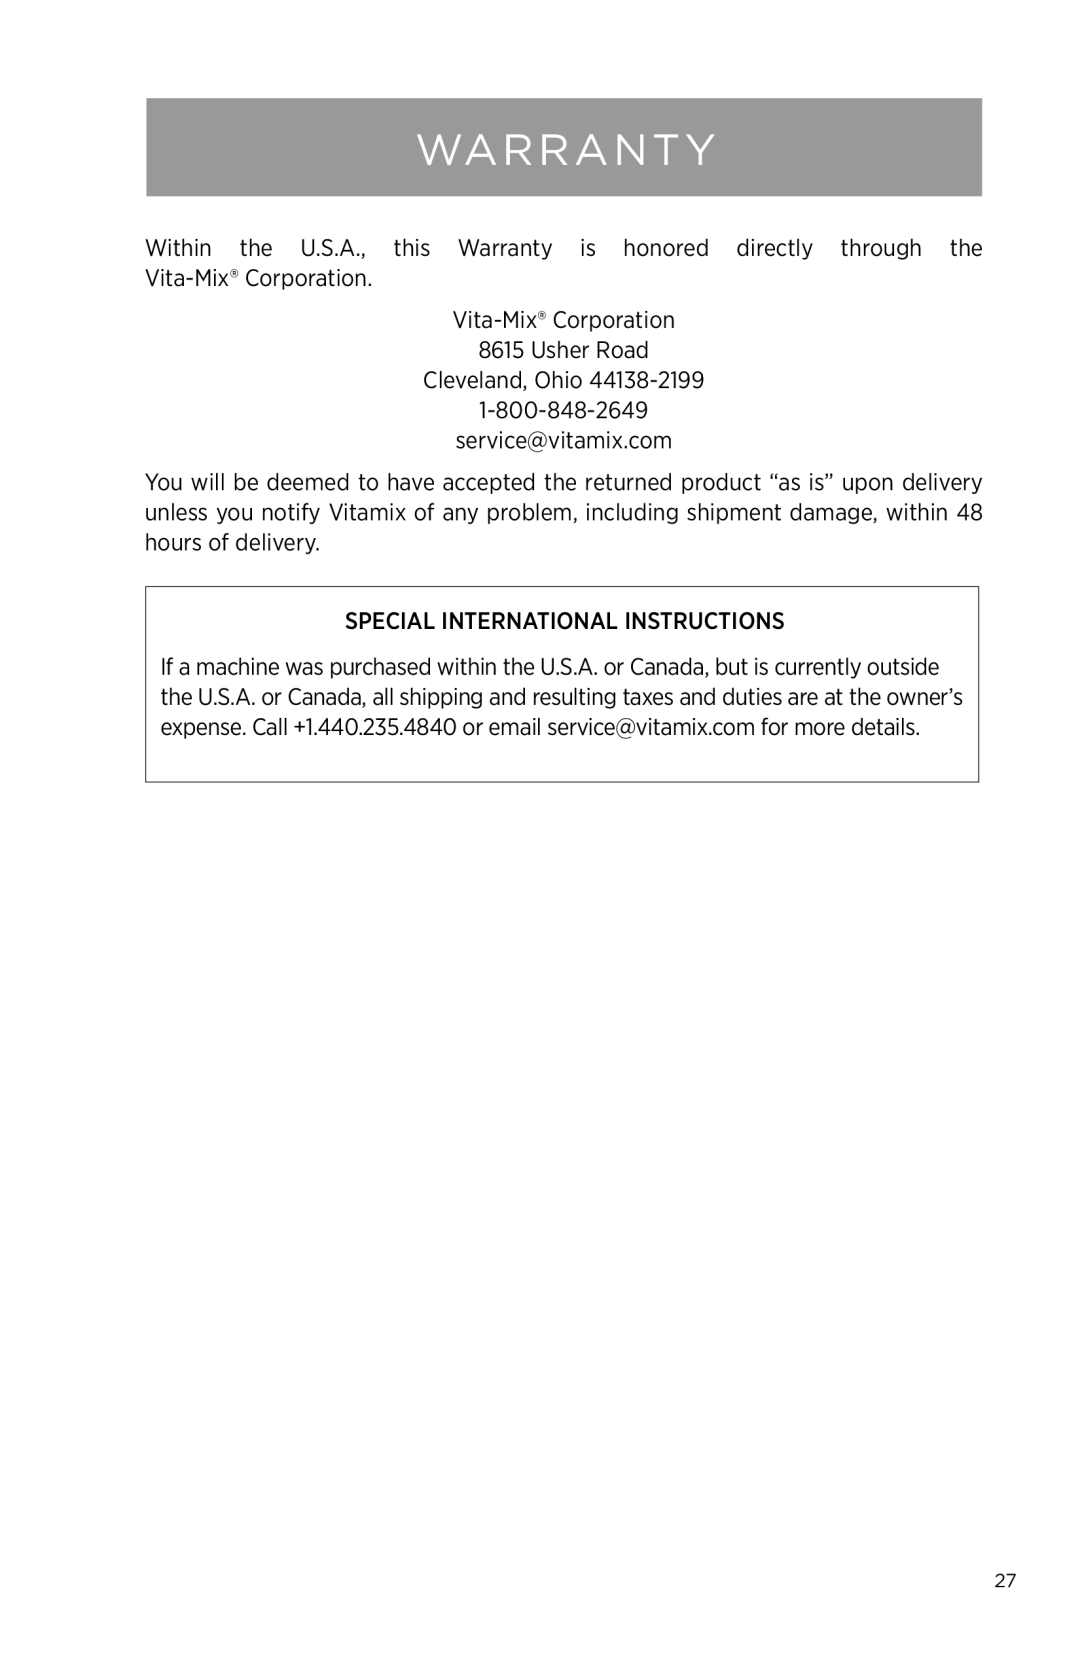 Vita-Mix NA owner manual Warranty, Vita-Mix Corporation 8615 Usher Road Cleveland, Ohio 